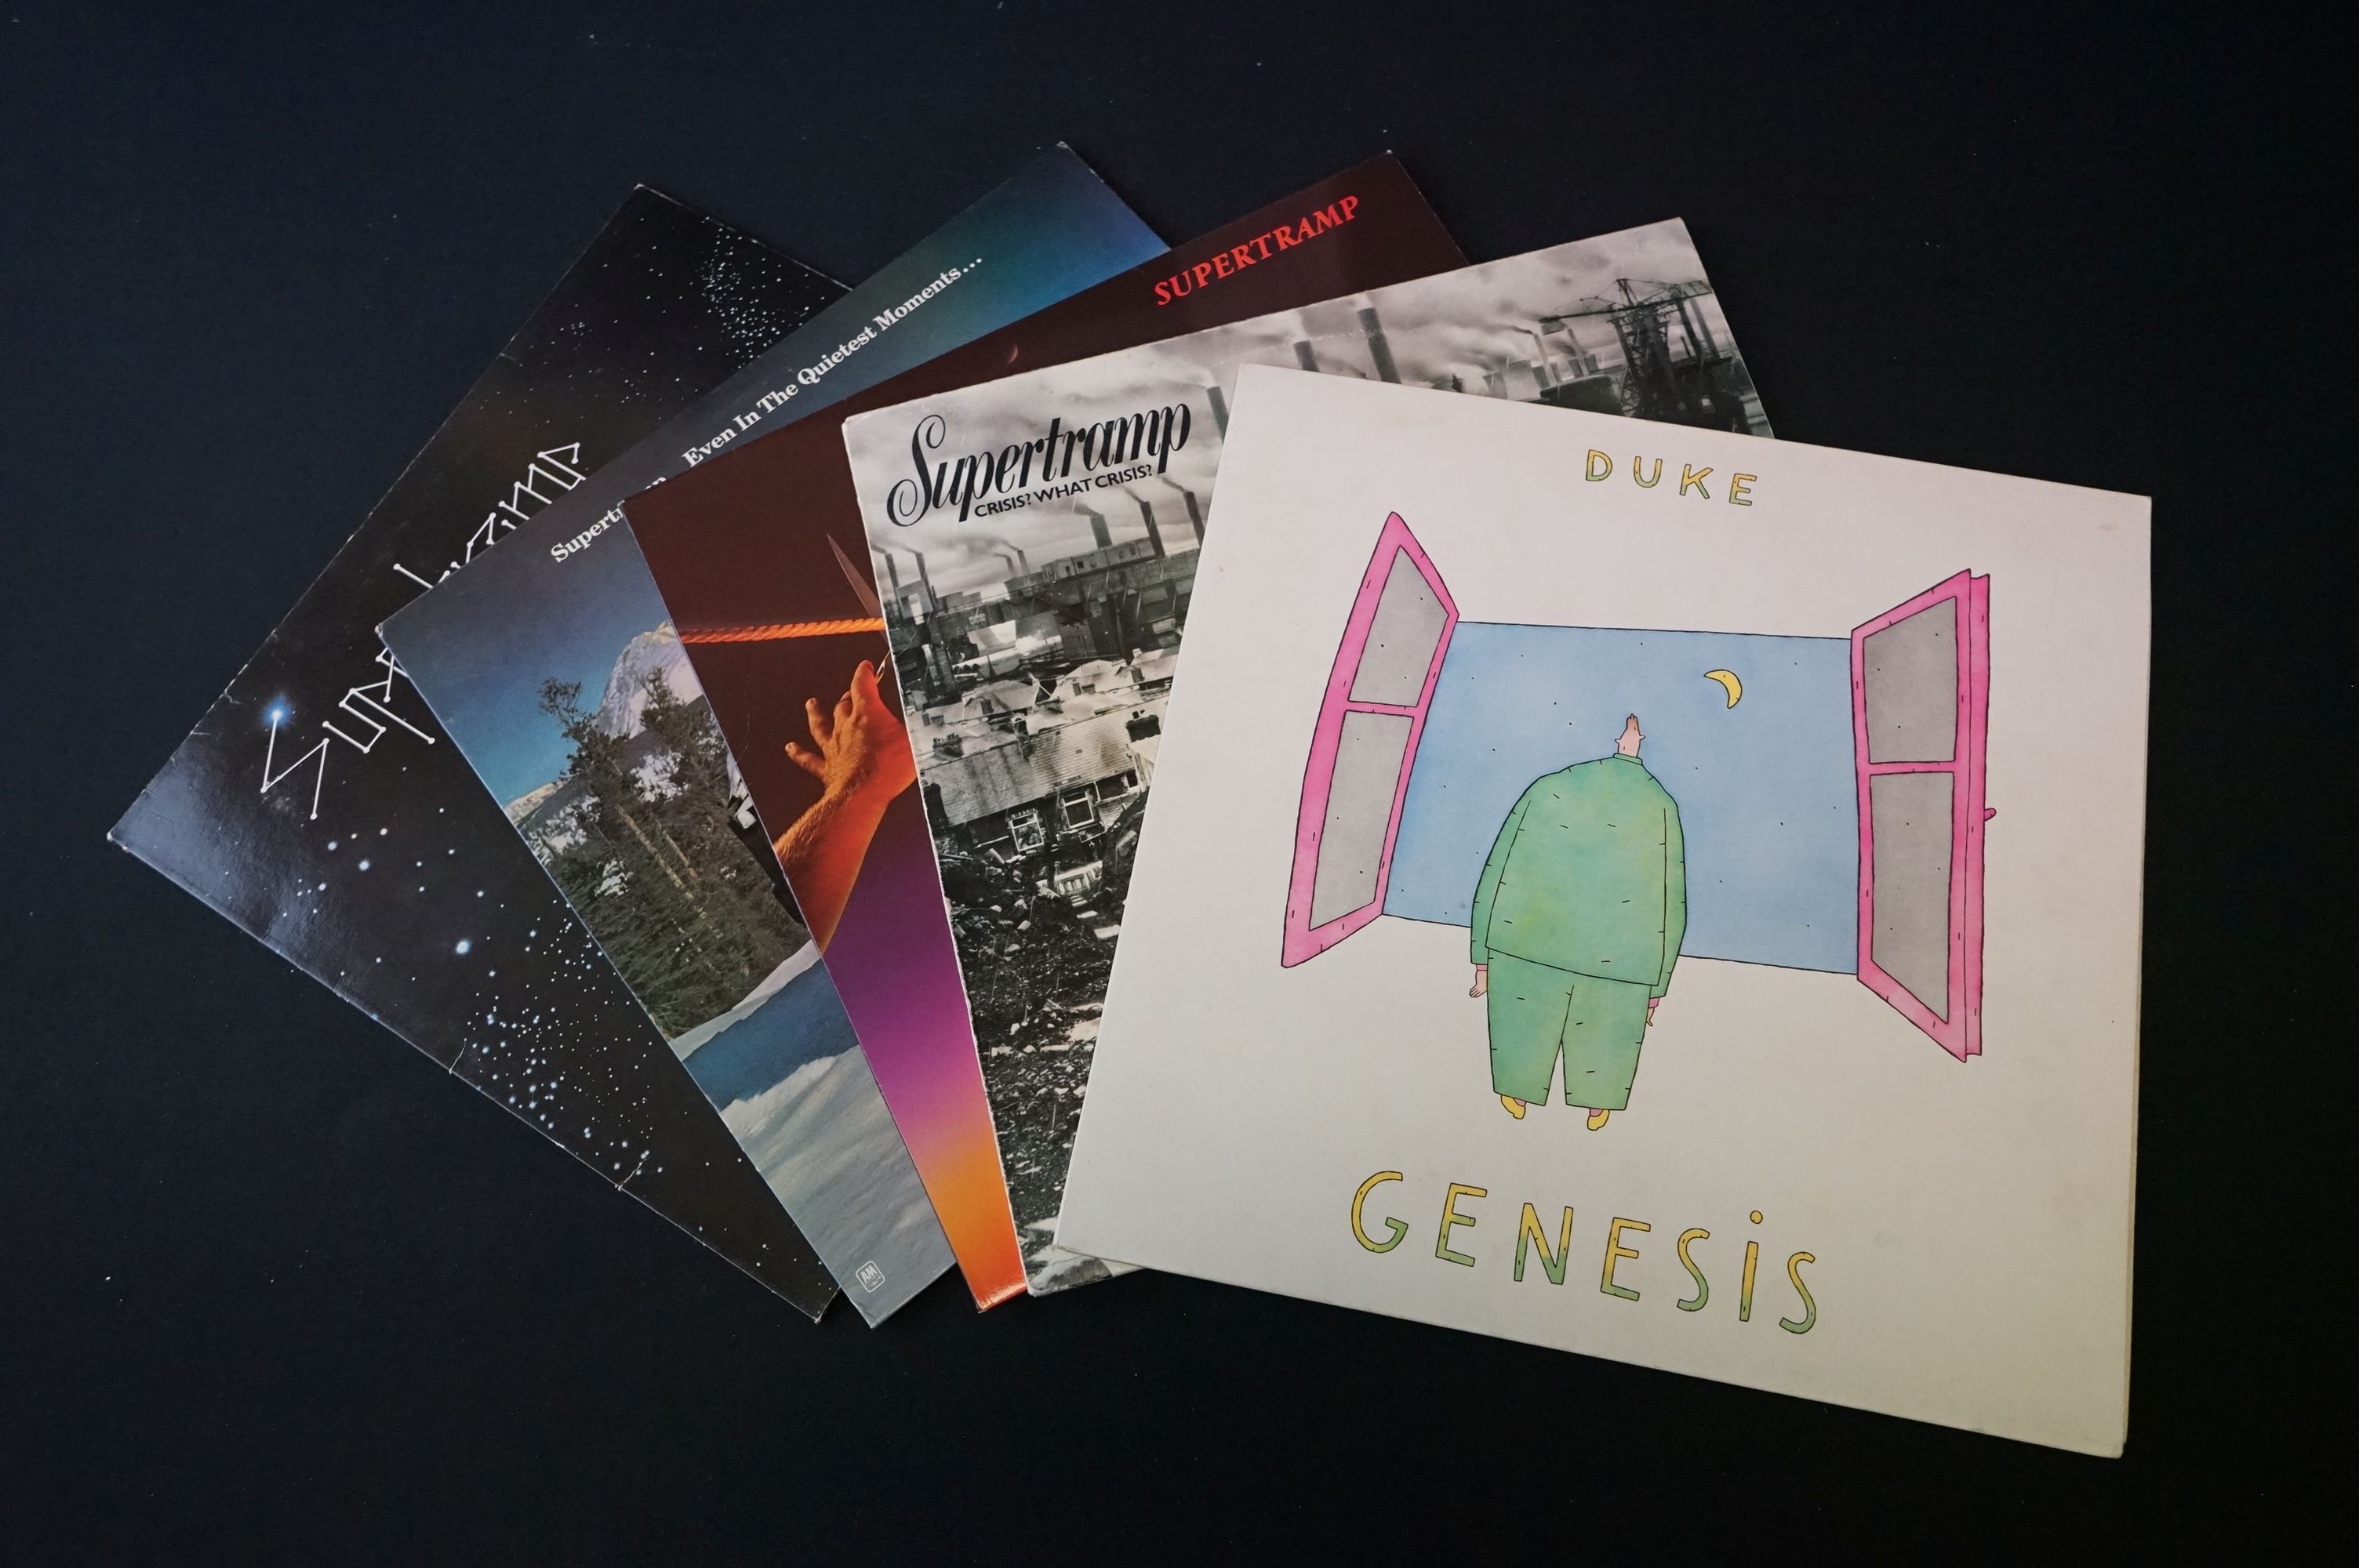 Vinyl - 12 rock & pop LP's to include Genesis, Paul Simon, Supertramp, Thompson Twins, Graham - Image 3 of 3